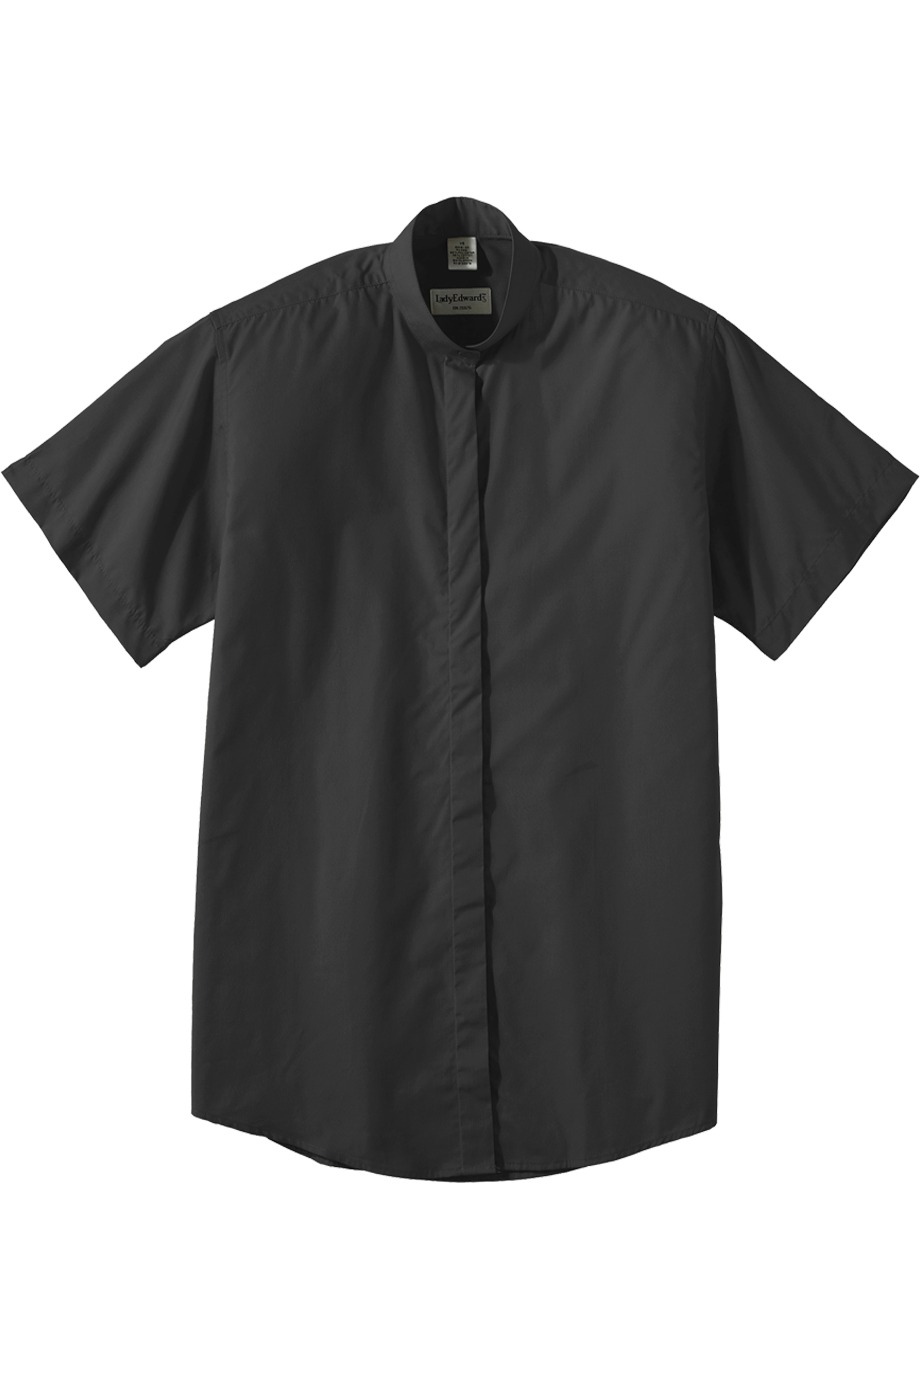 Edwards Garment 5346 - Women's Short Sleeve Banded Collar Shirt